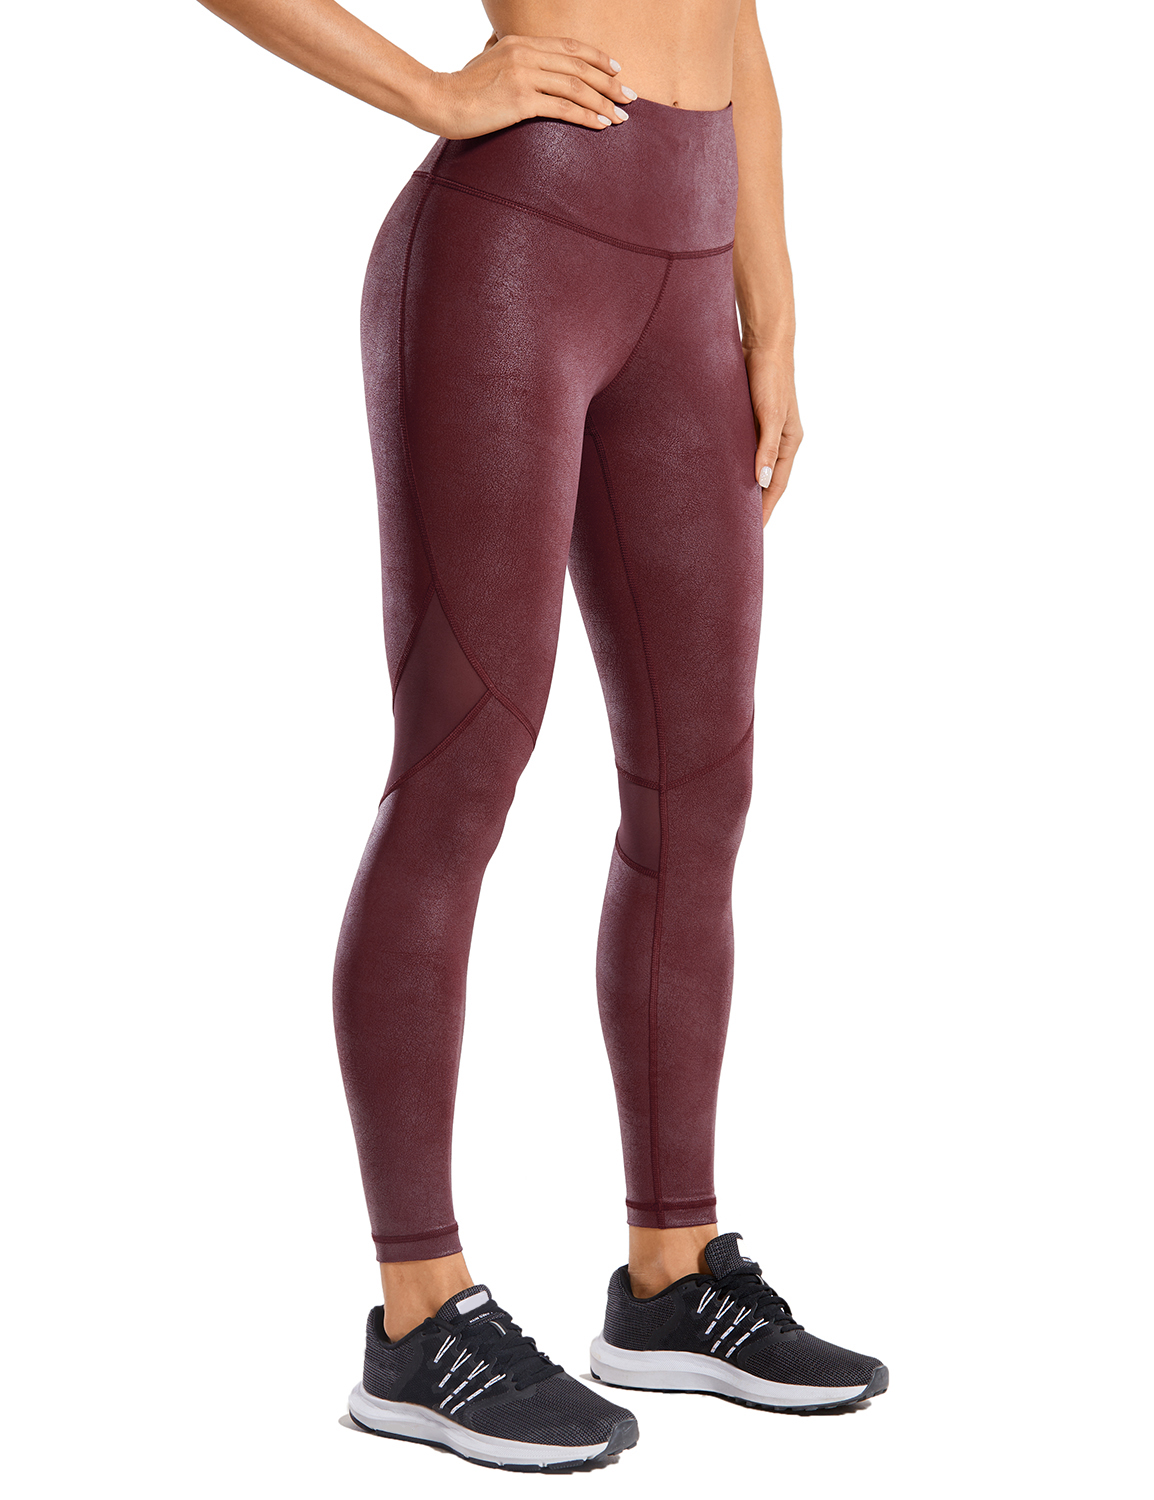 CRZ YOGA Matte Faux Leather Women's Leggings 25 Inches